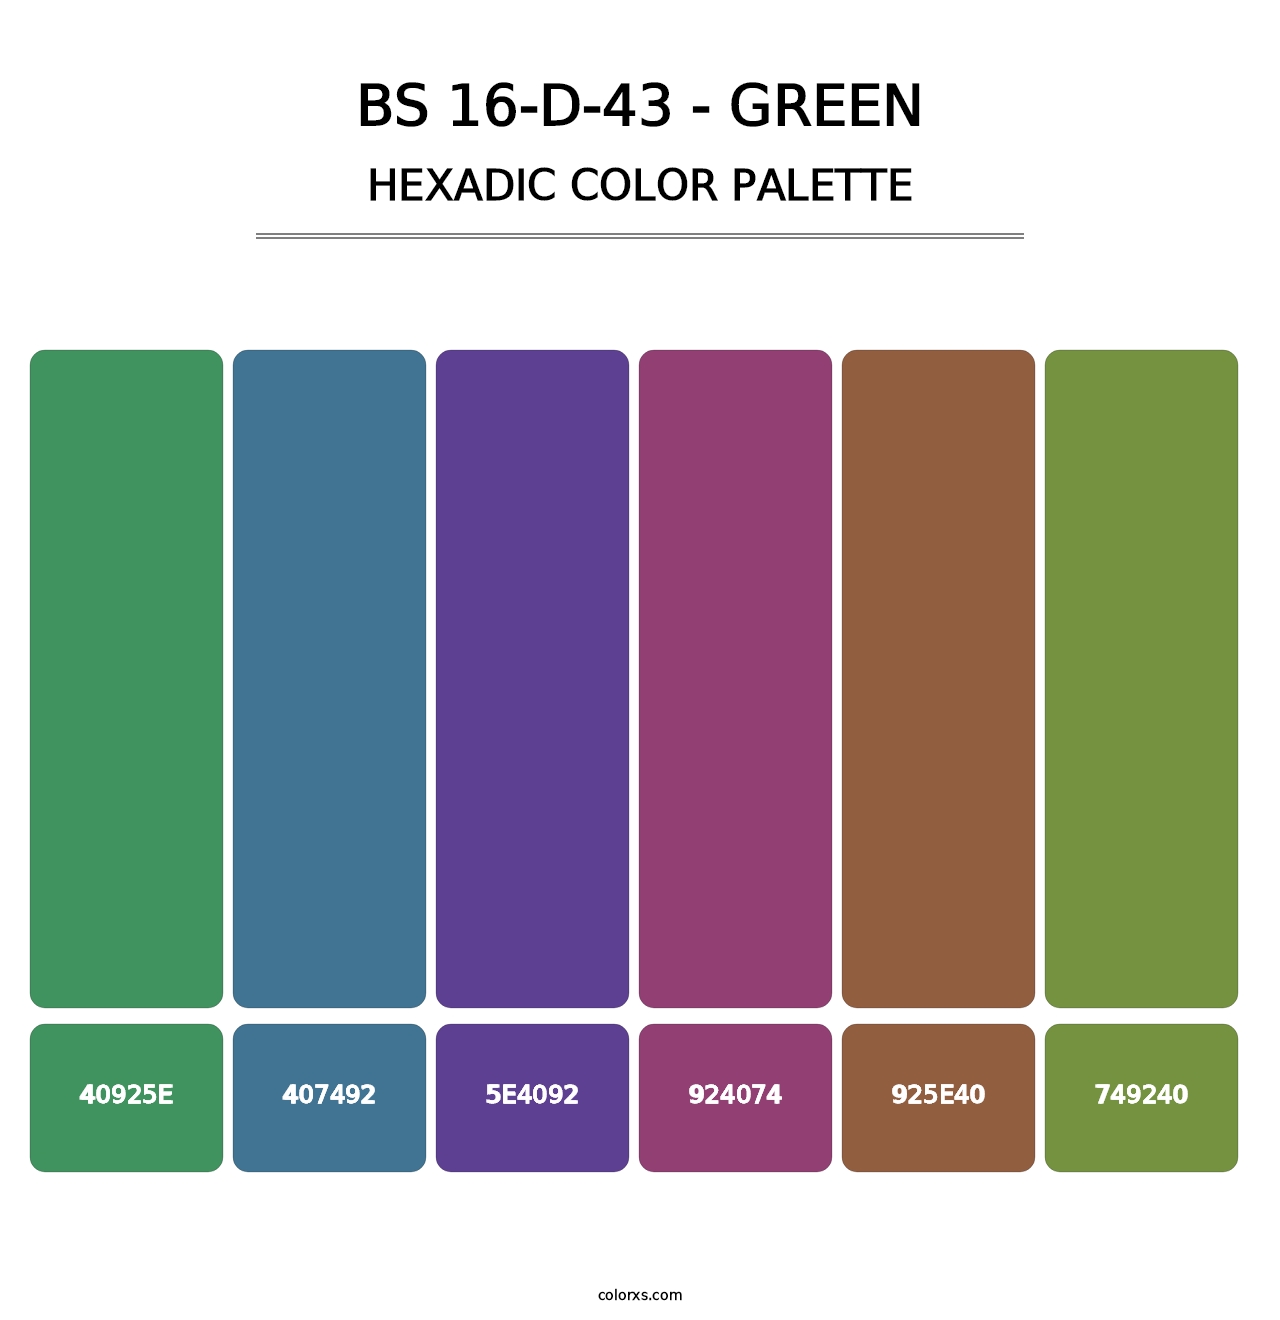 BS 16-D-43 - Green - Hexadic Color Palette